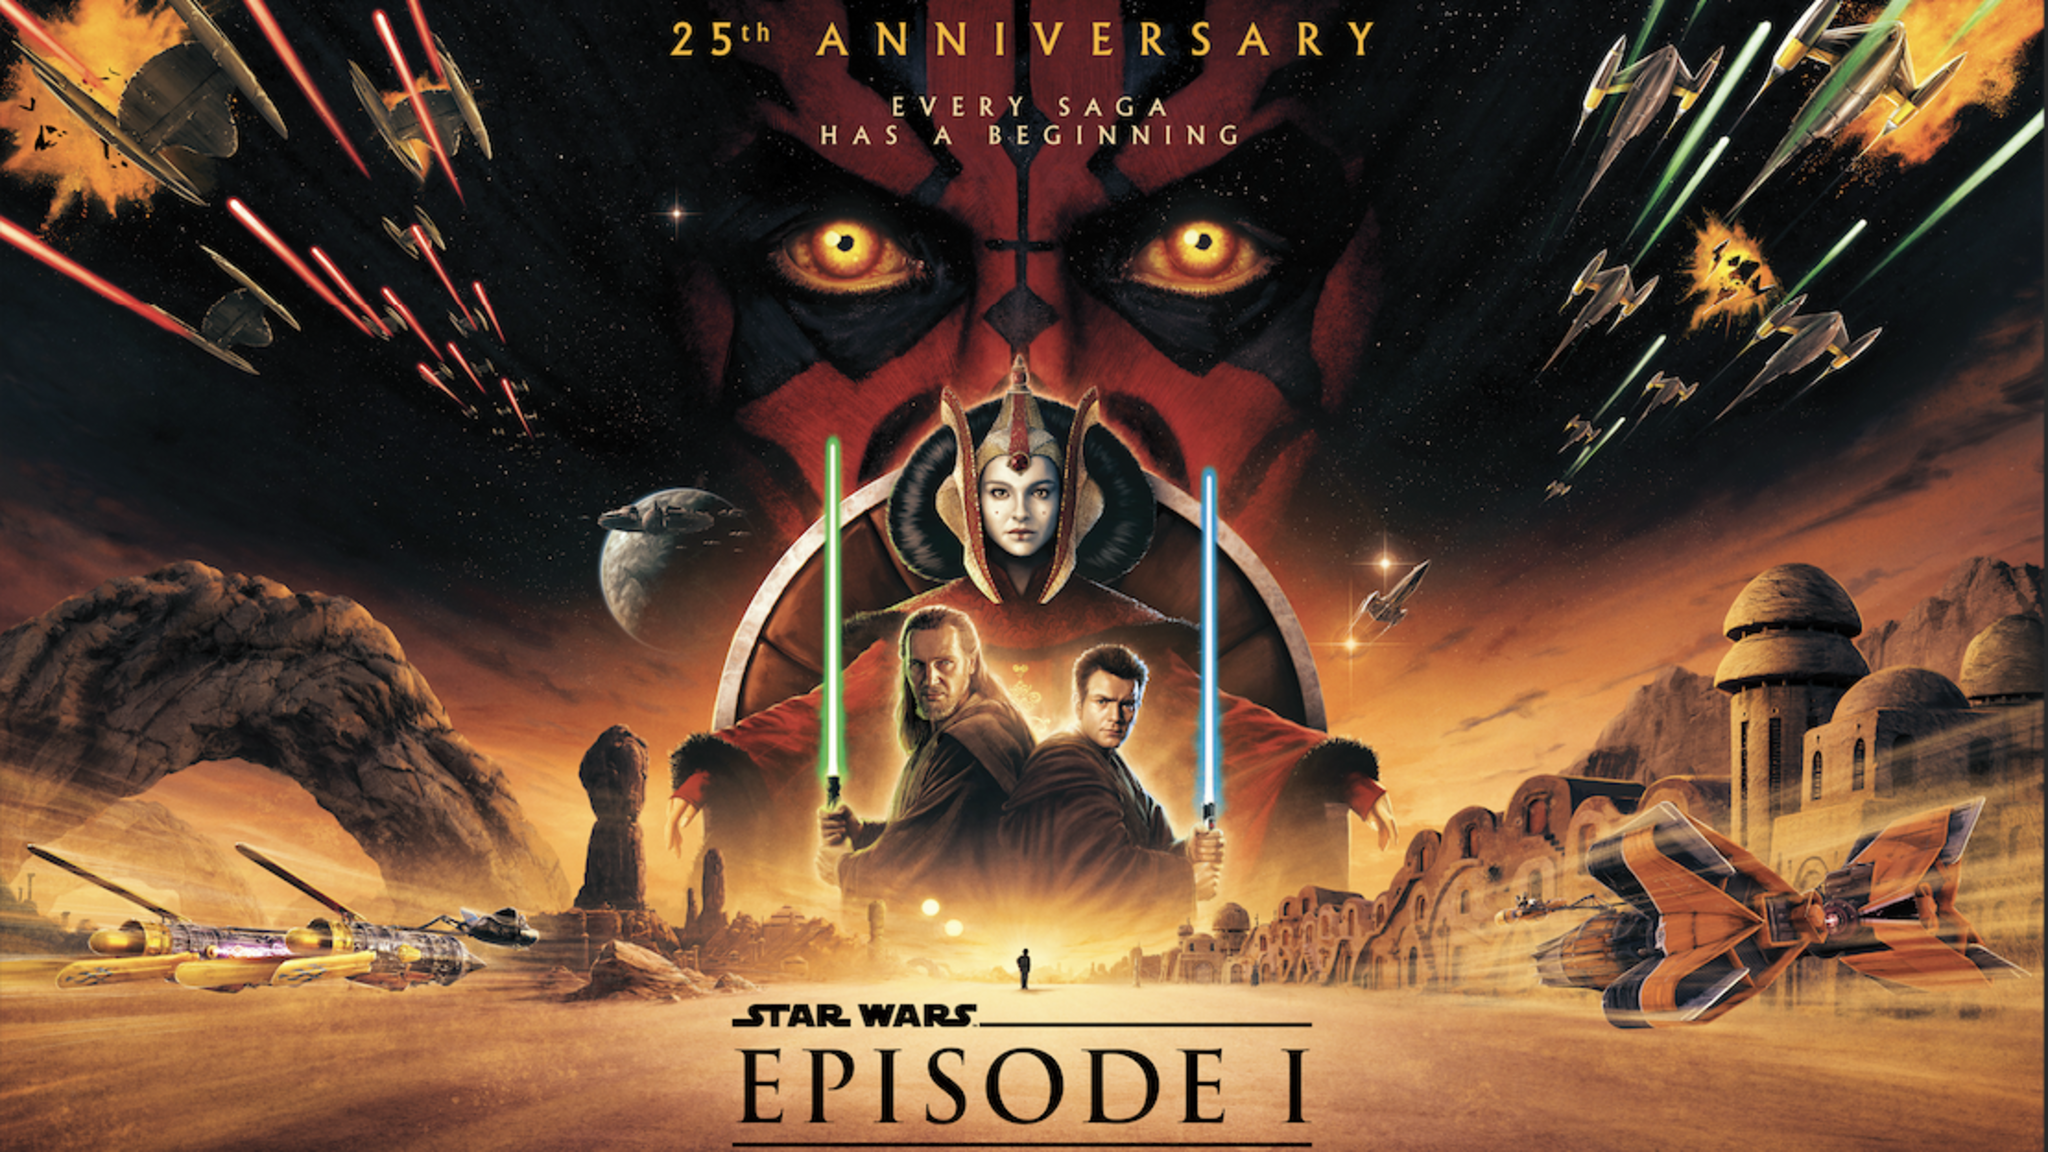 Star Wars - The Phantom Menace (25th Anniversary)